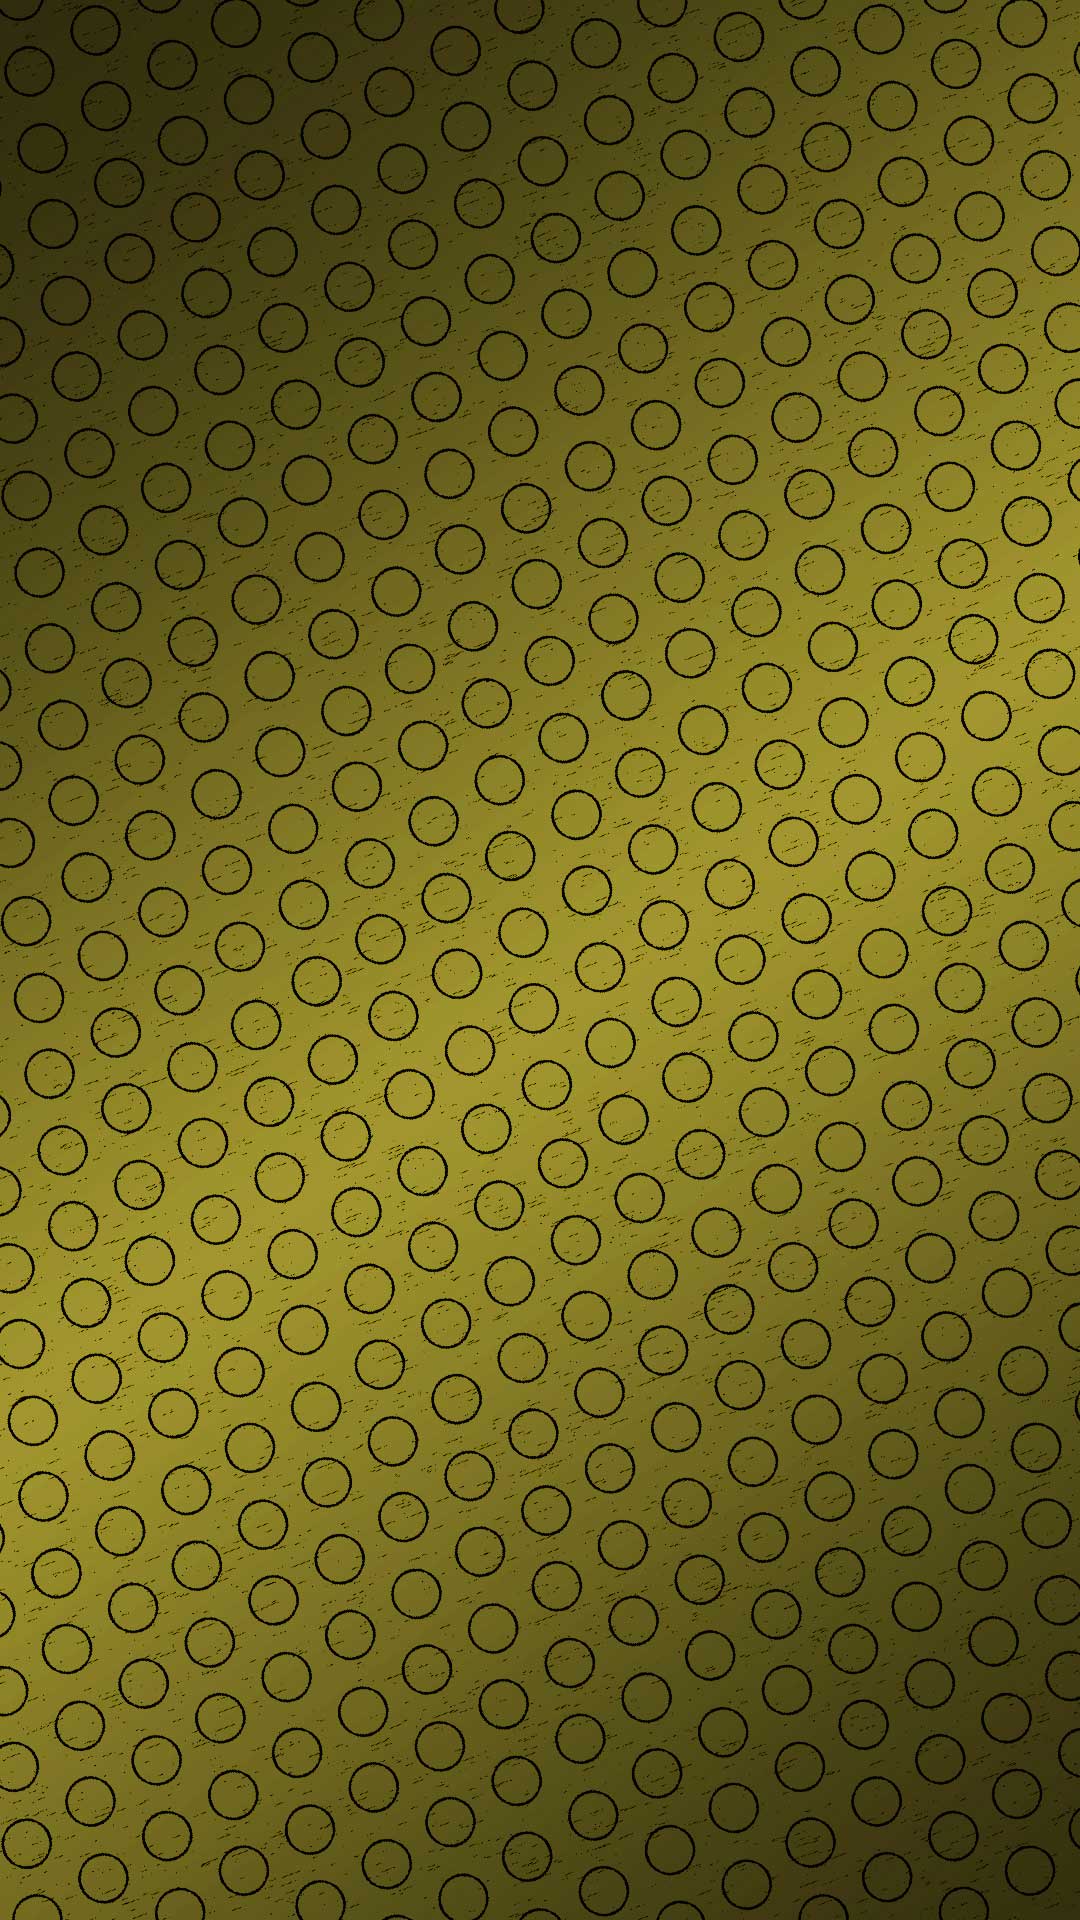 yellow and black dots wallpaper